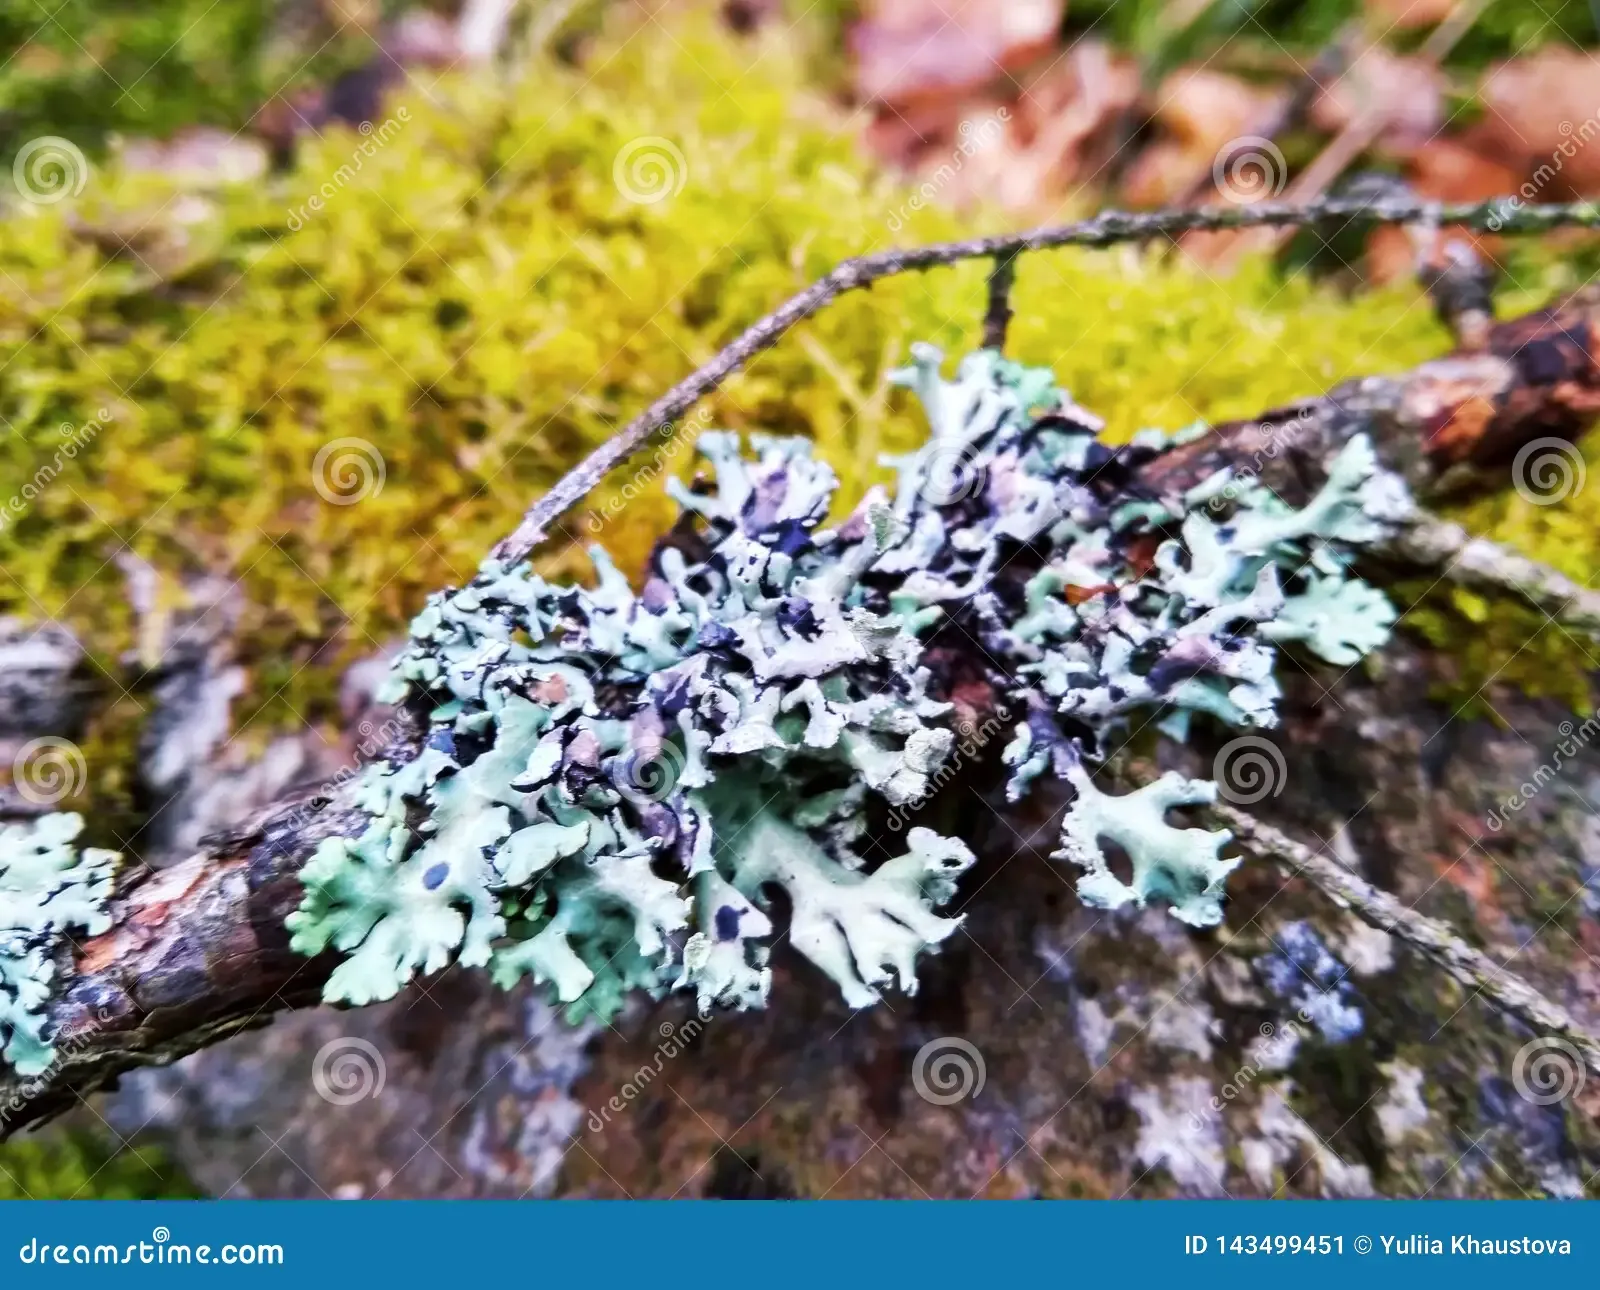 spruce-branch-blue-lichen-green-moss-close-up-spruce-branch-blue-lichen-green-moss-143499451.jpg